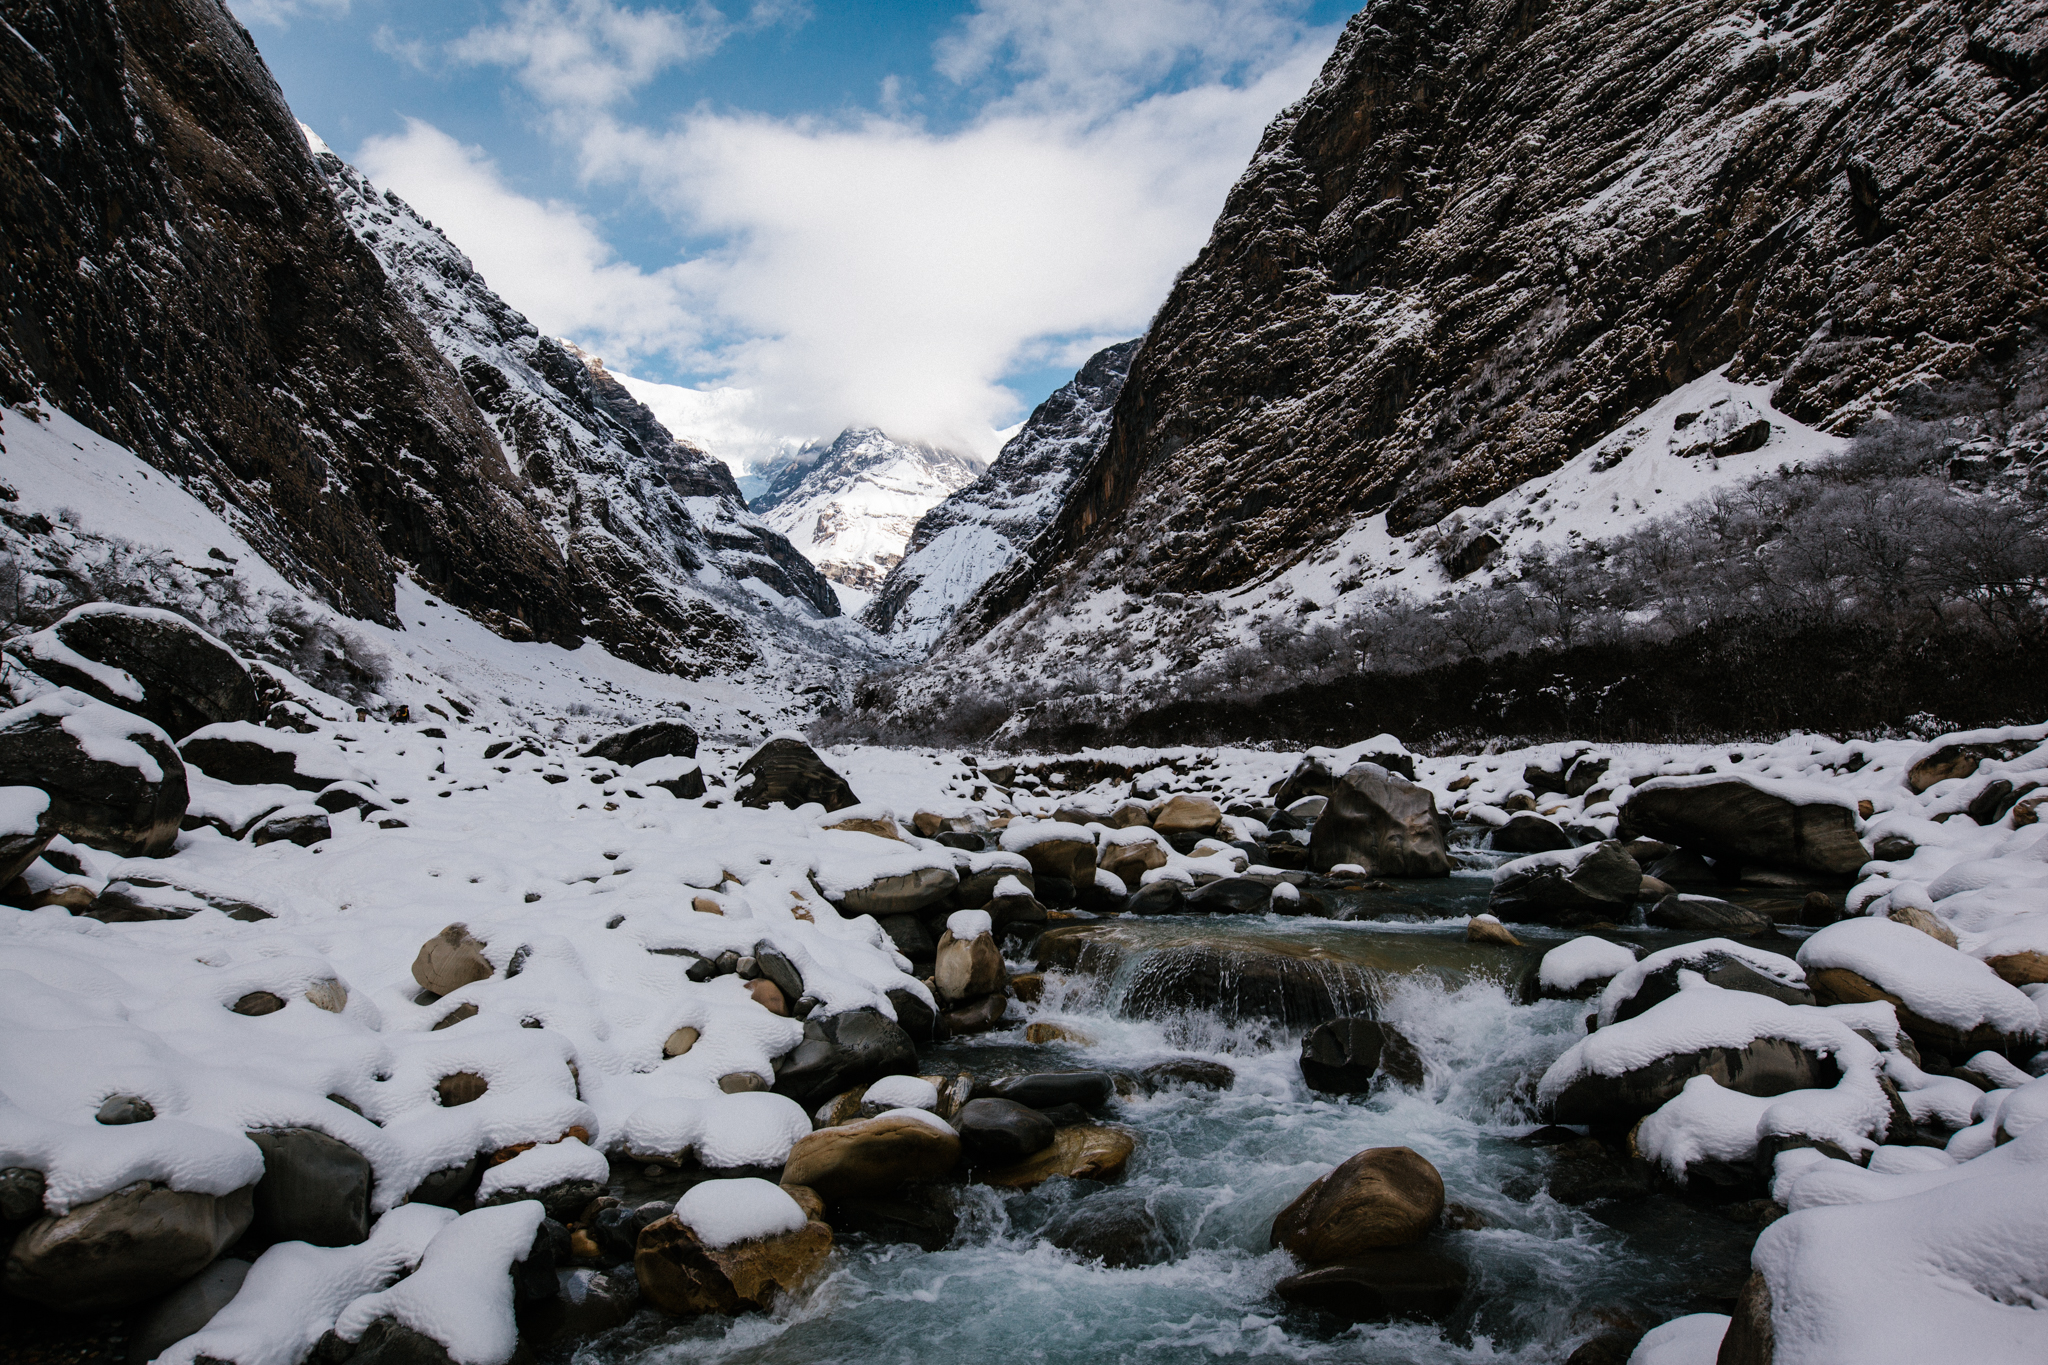 Anyone Can Do This 8-Day Trek Through Nepal